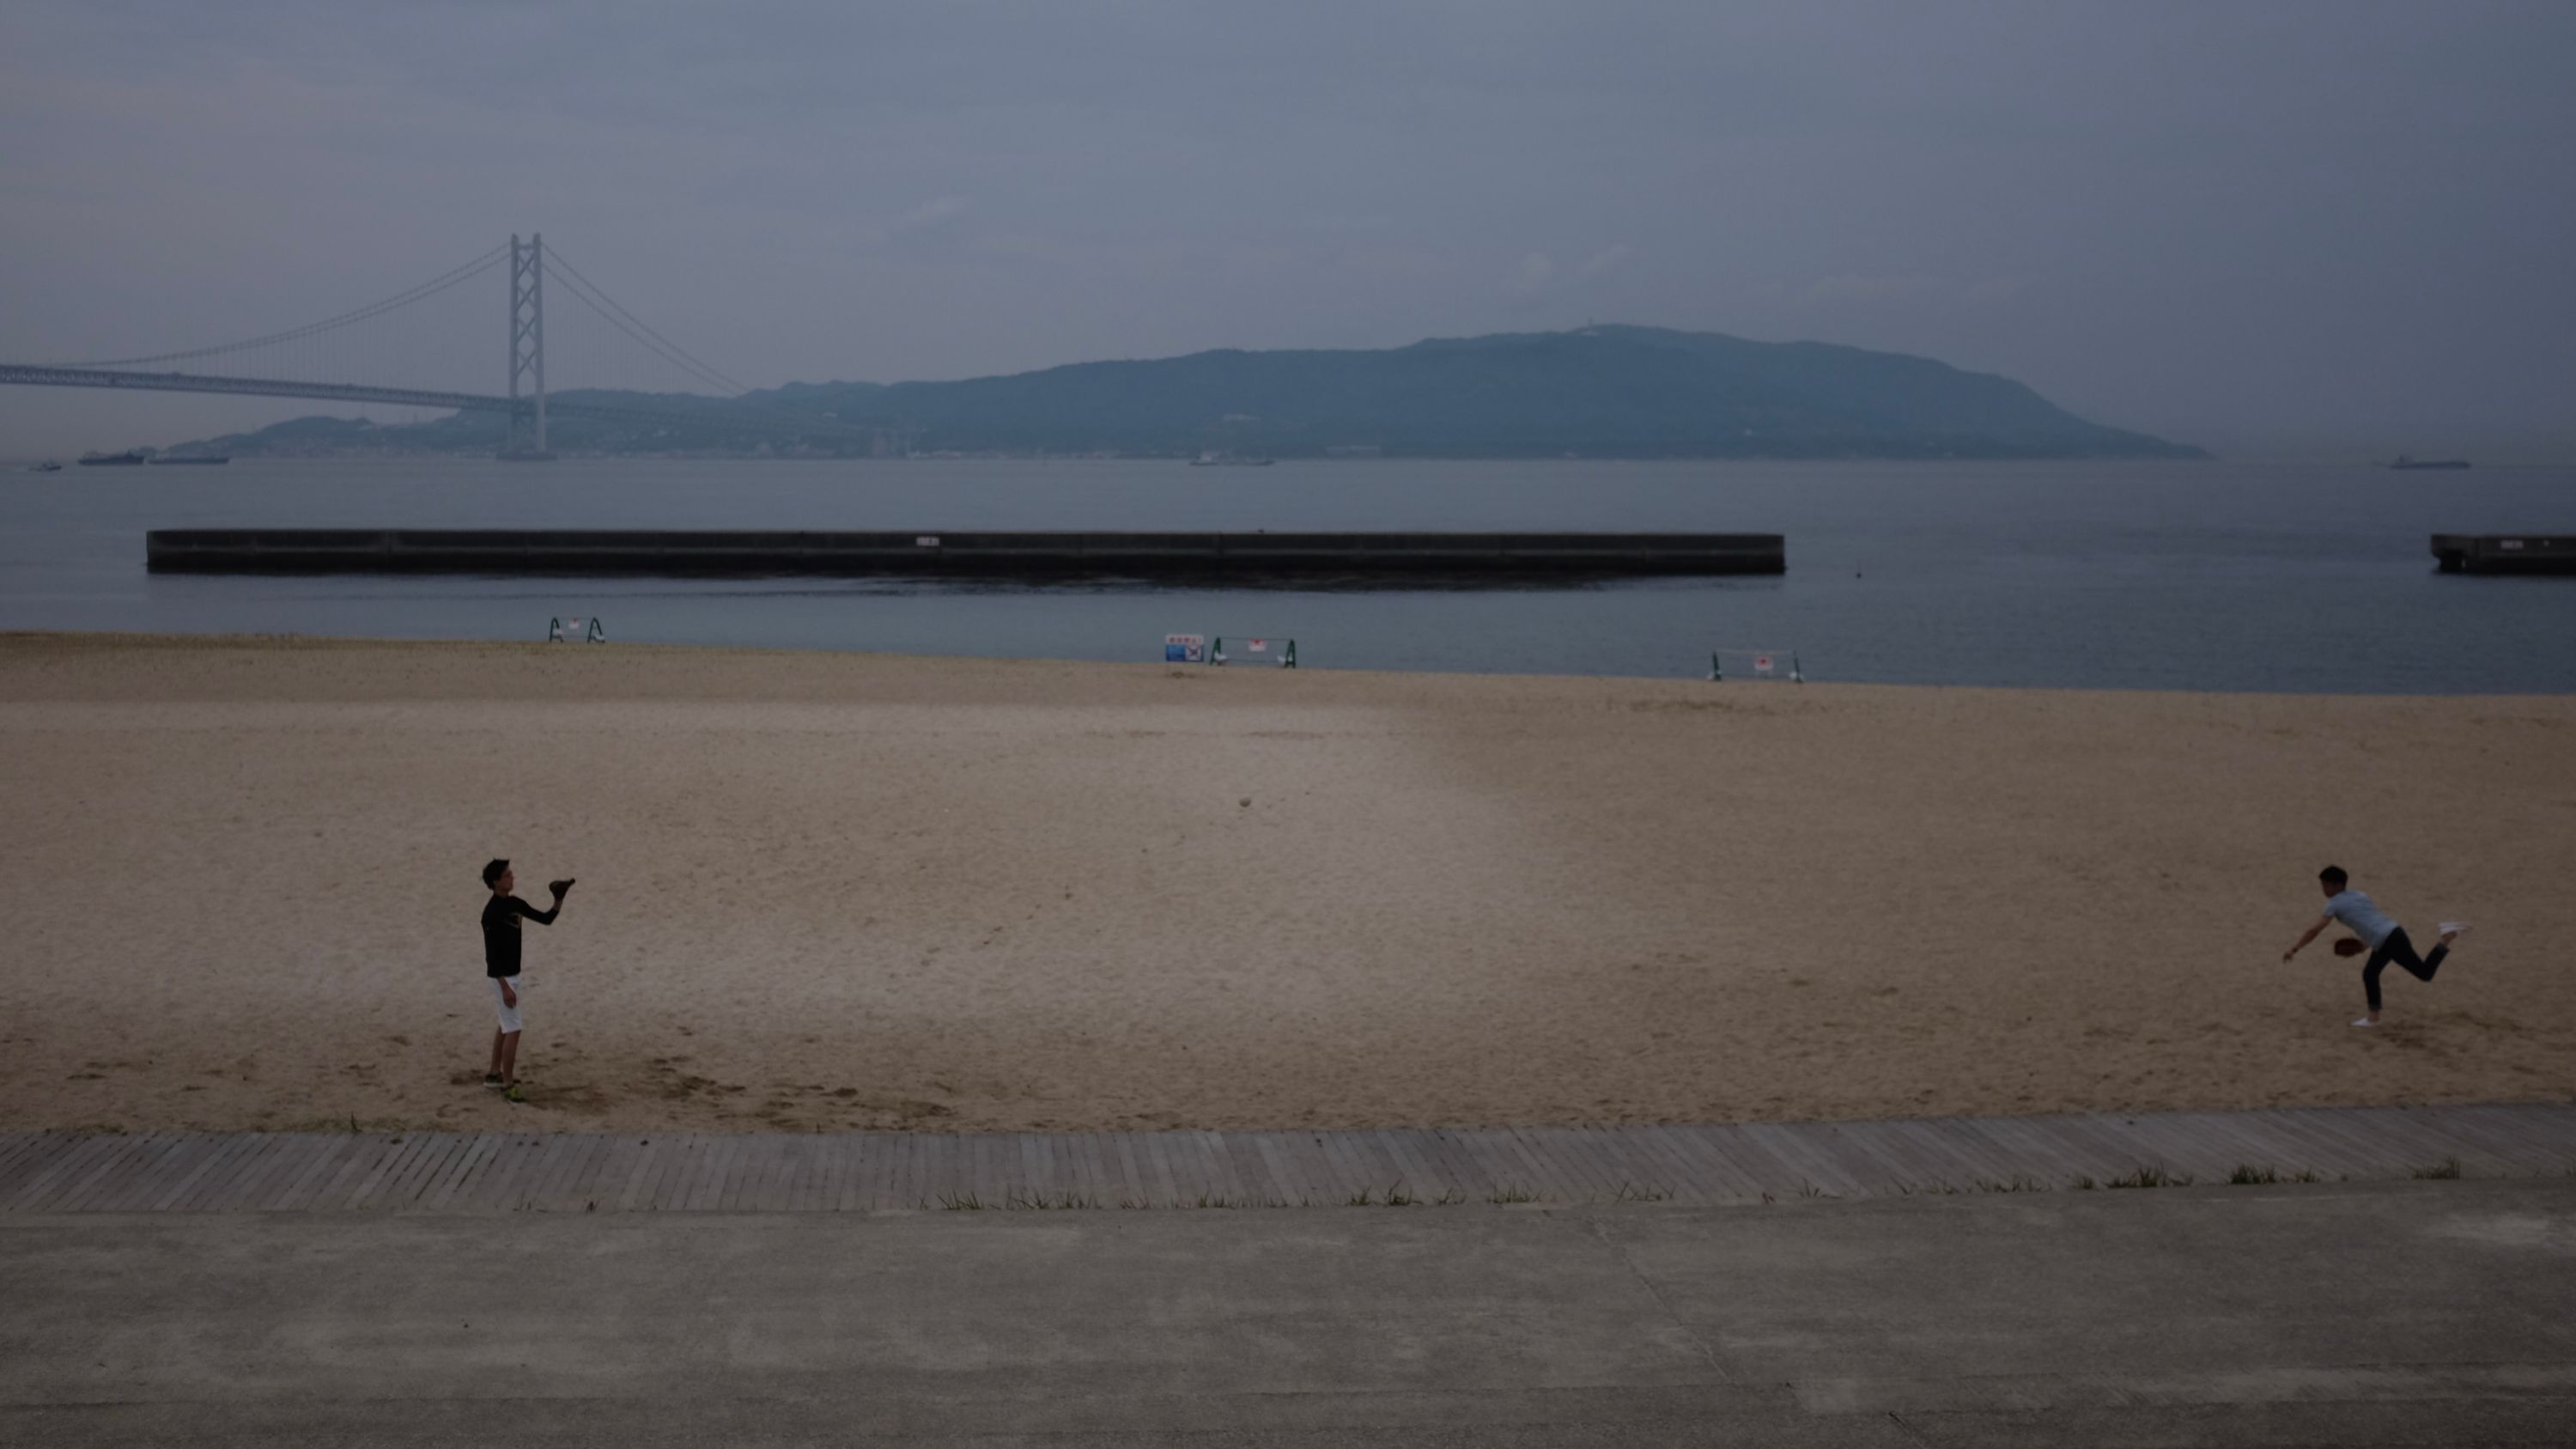 Two boys play baseball on a beach with the Akashi Kaikyō Bridge in the background.